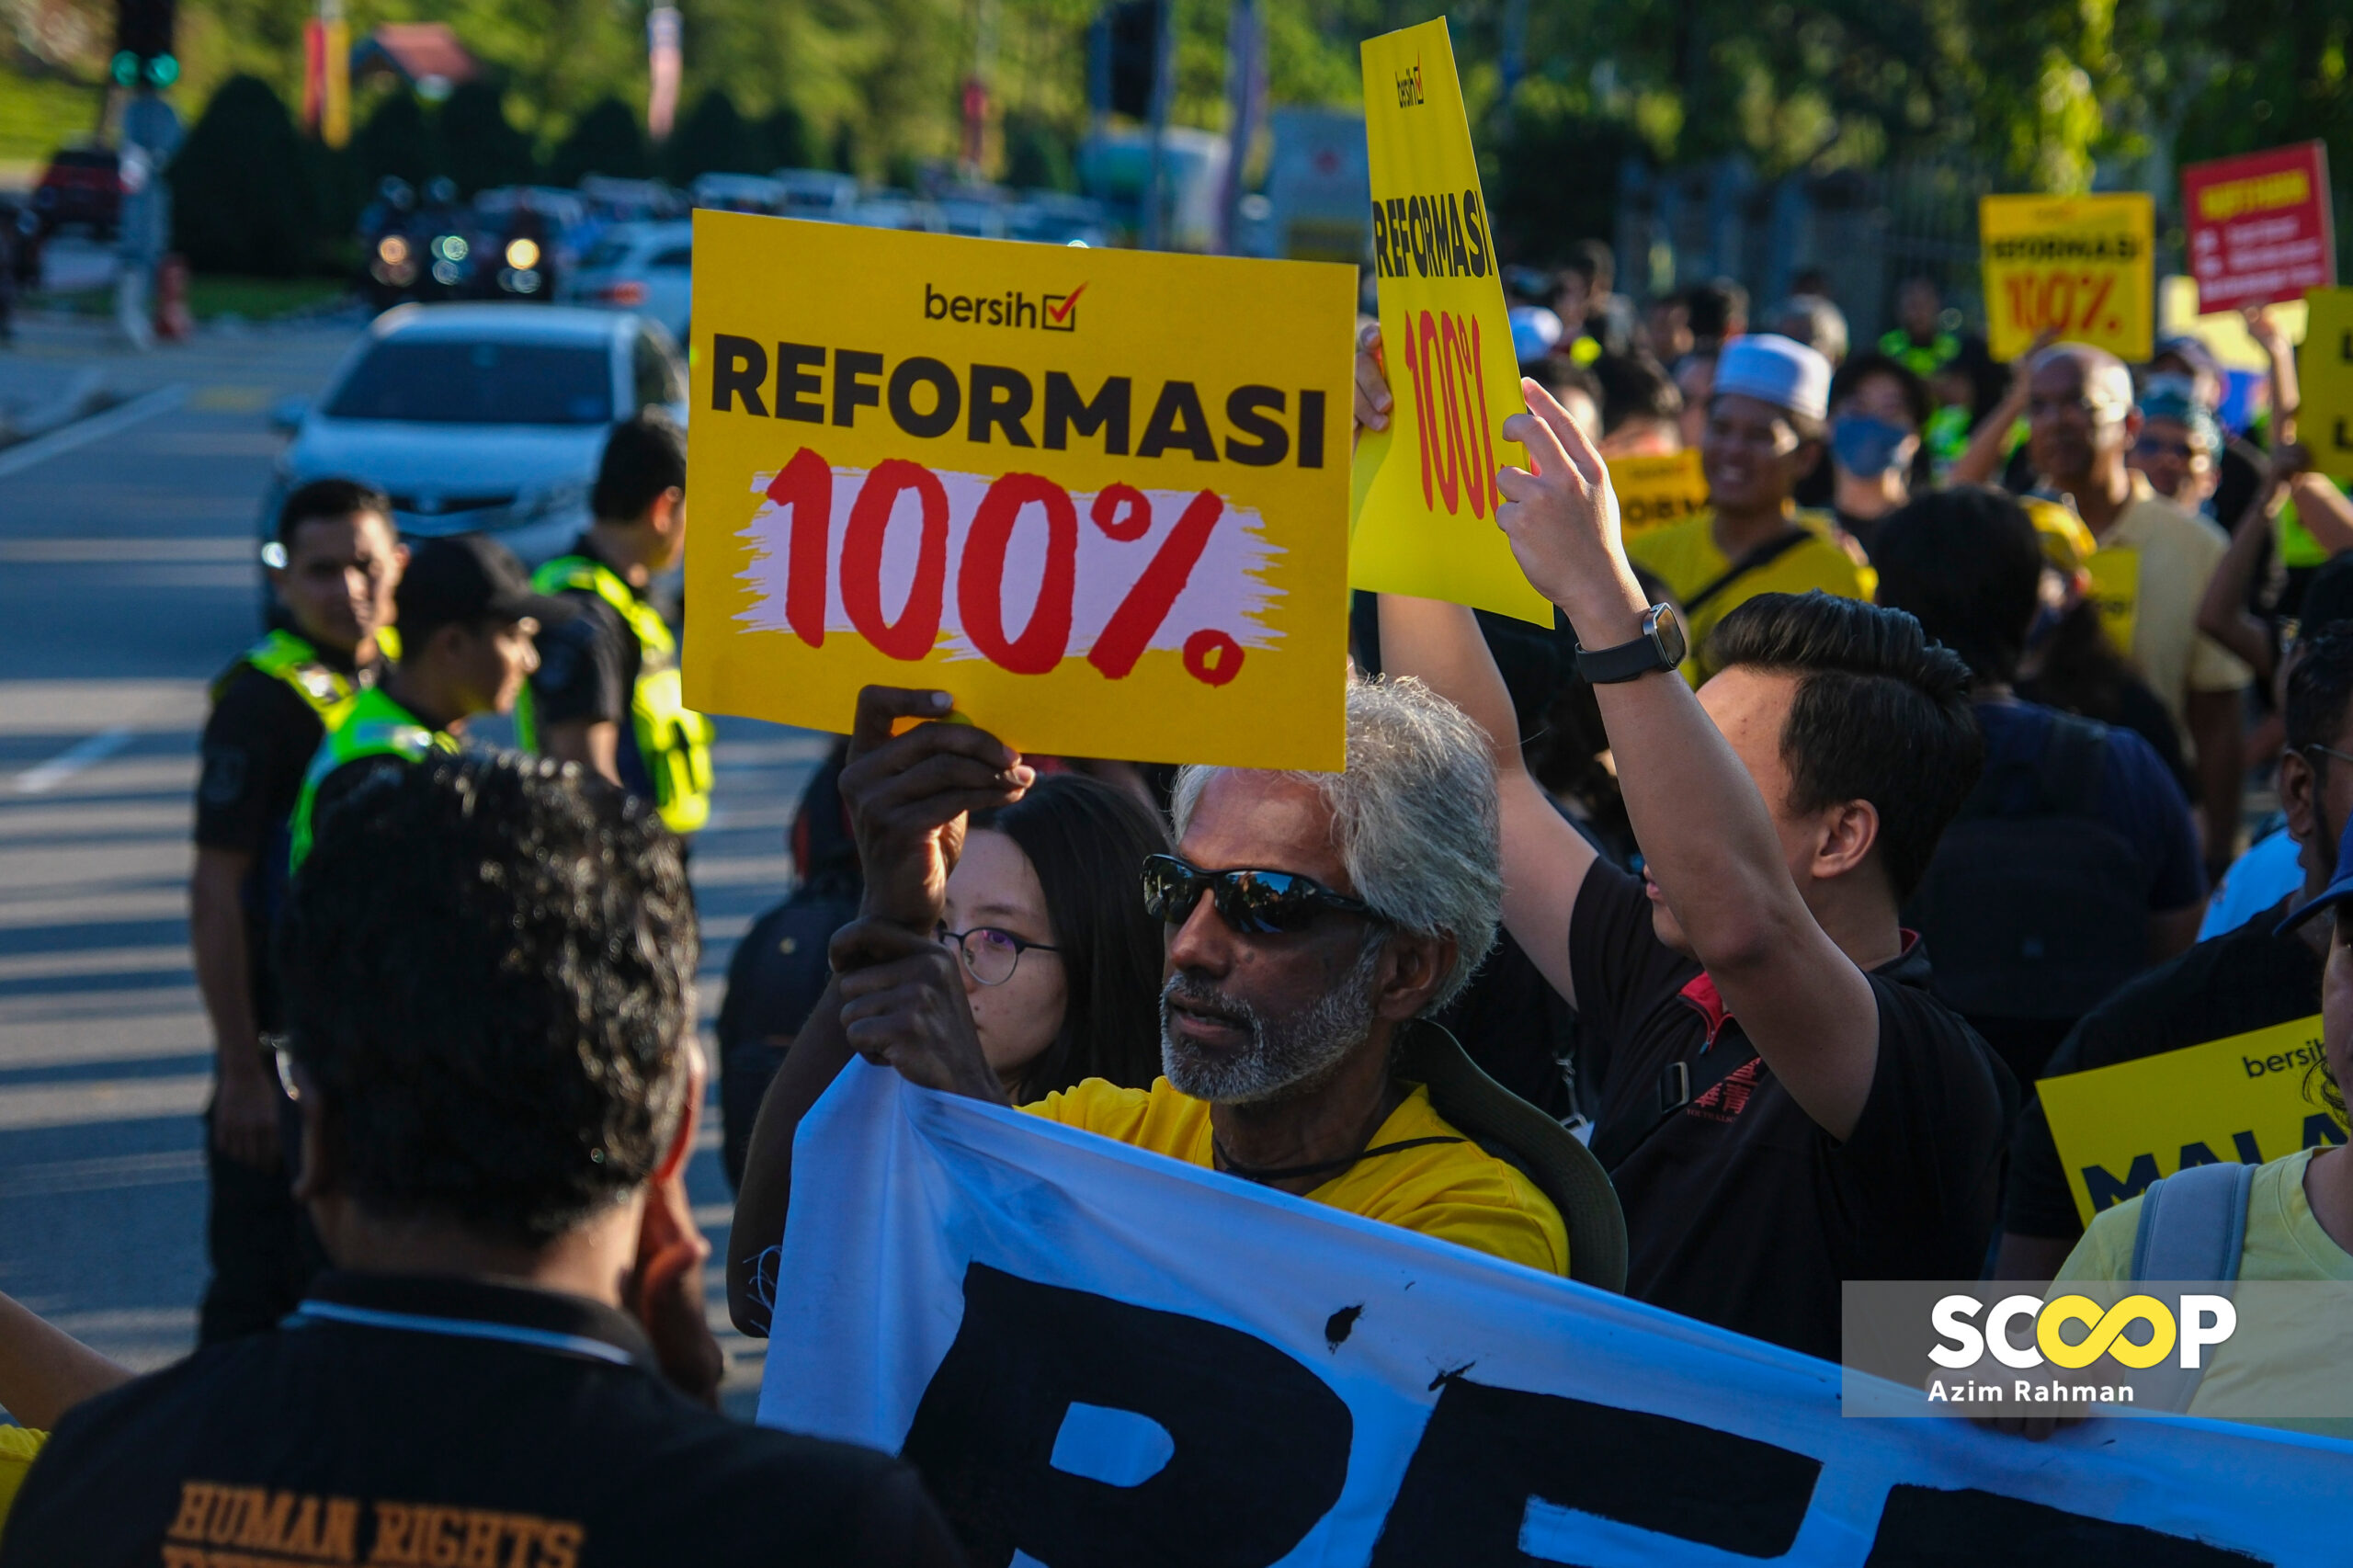 Cops to summon Bersih on rally held near Parliament